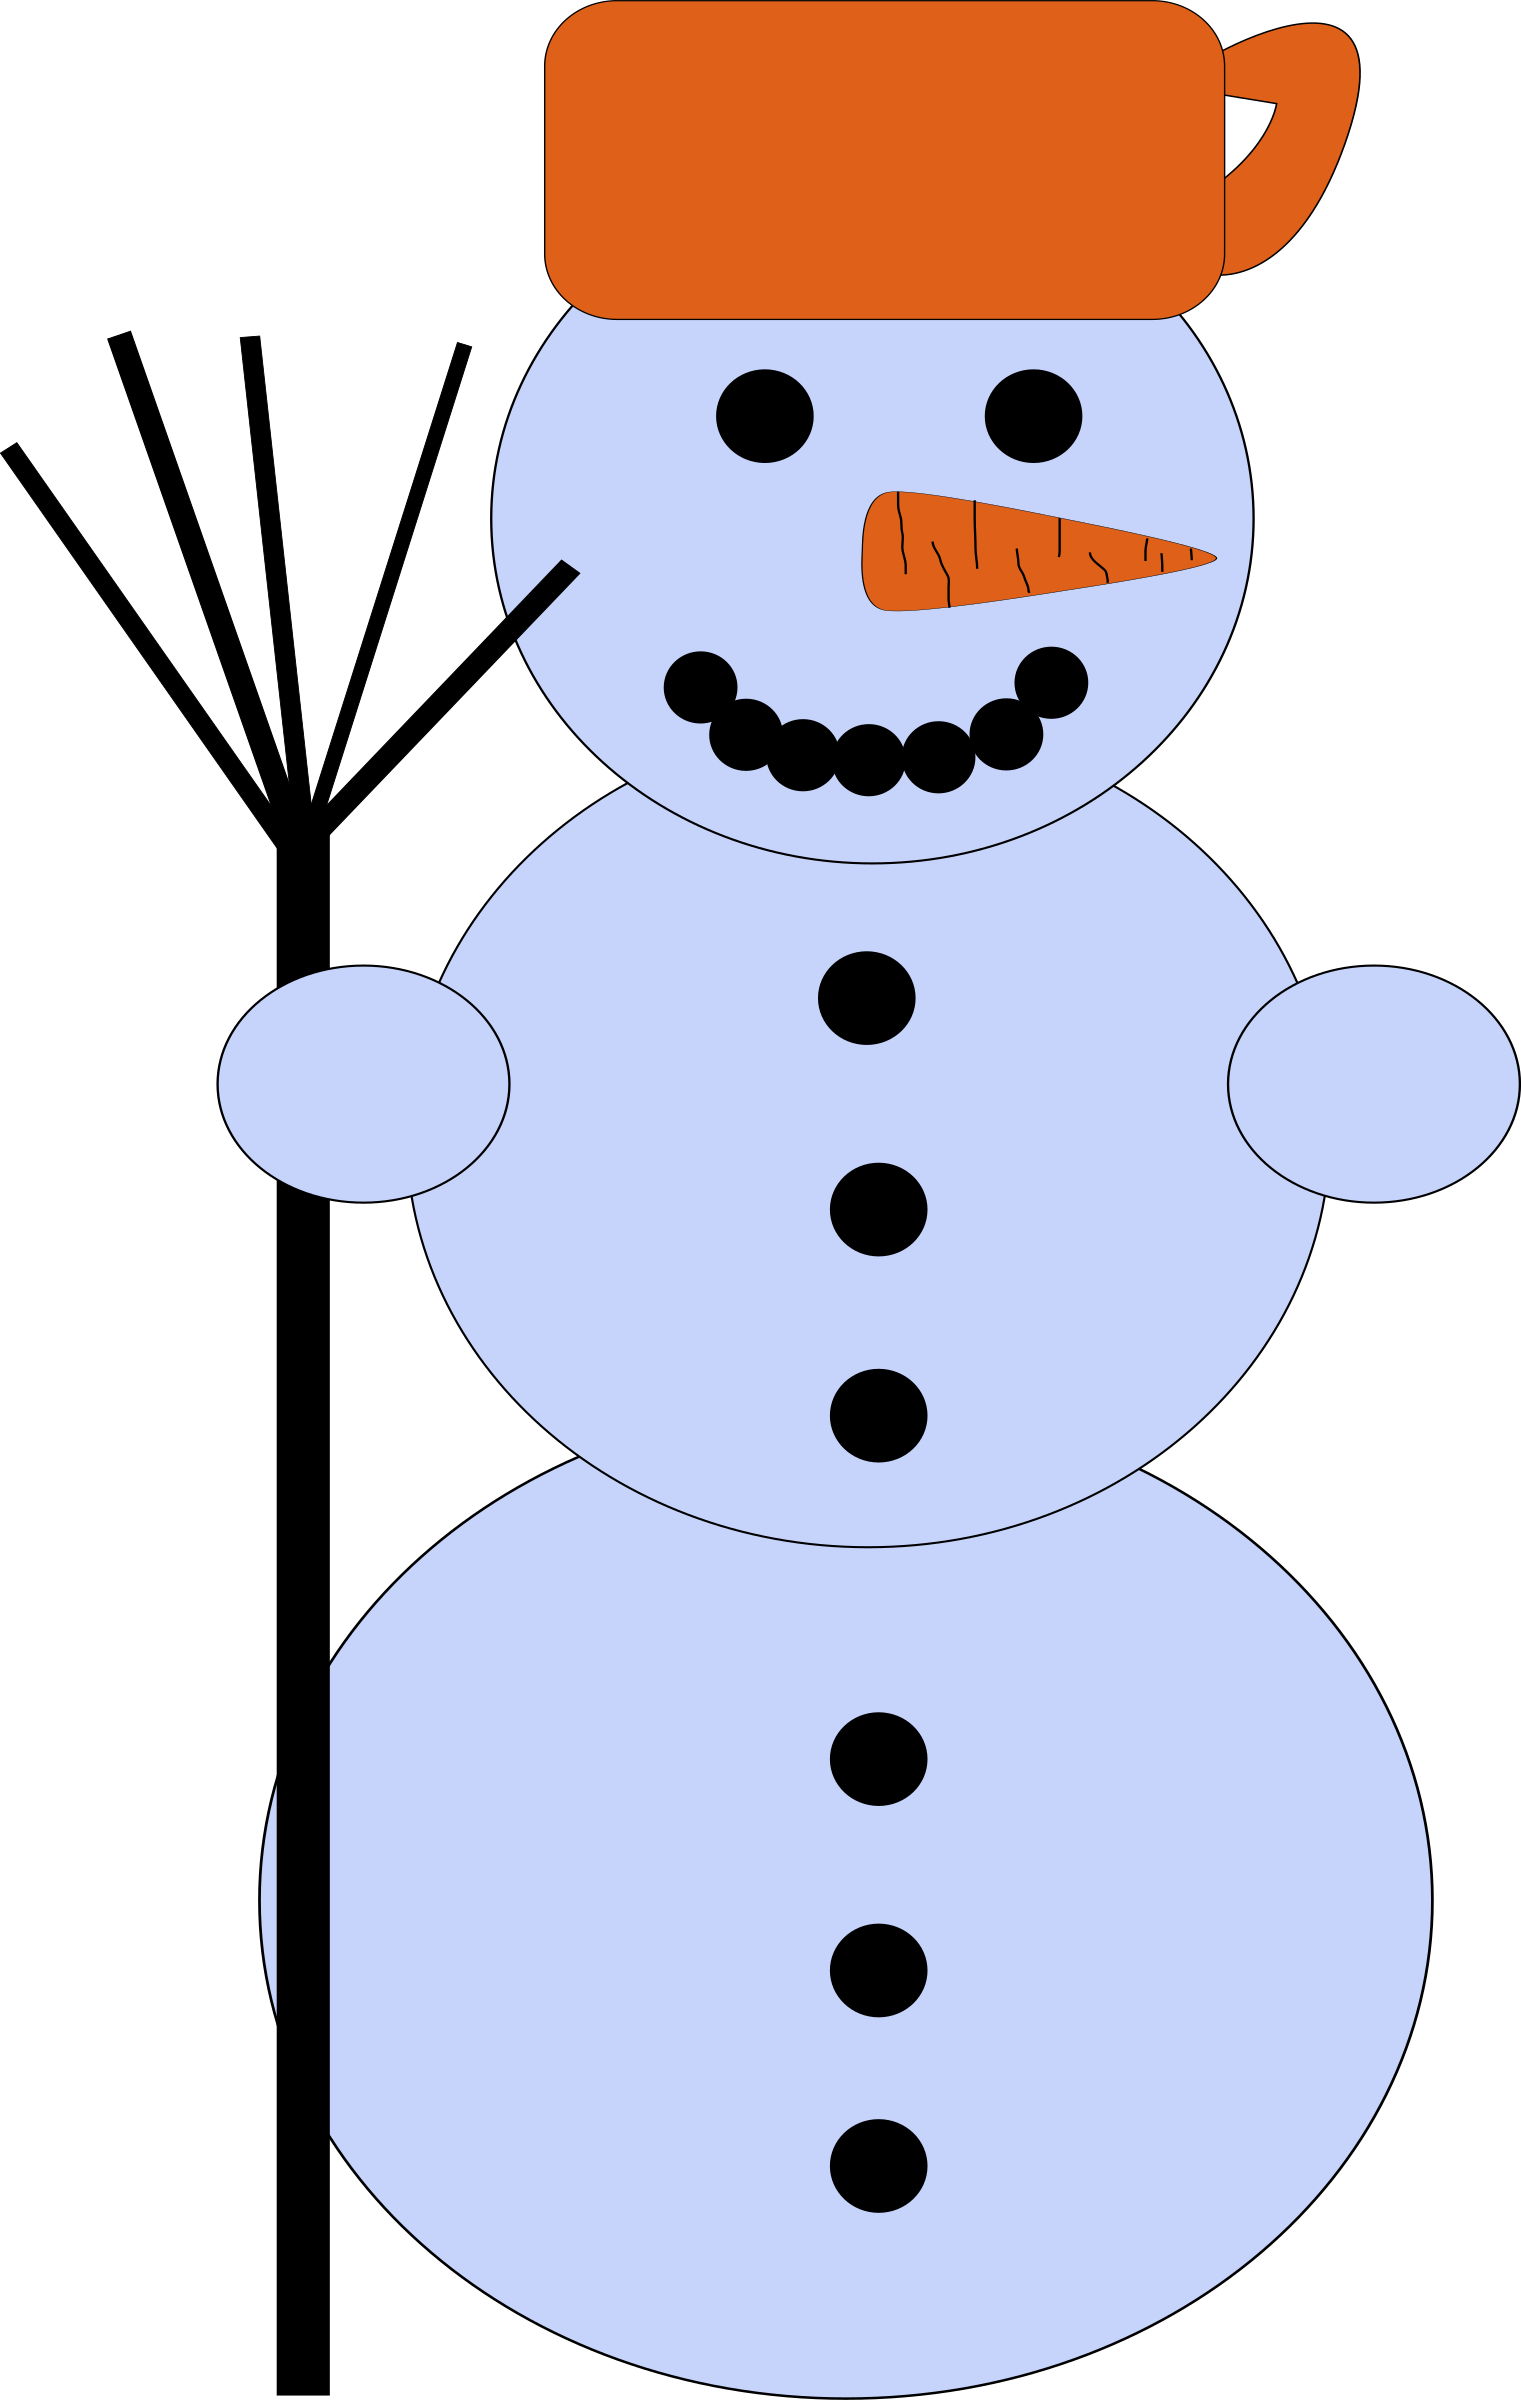 snowman clipart blue